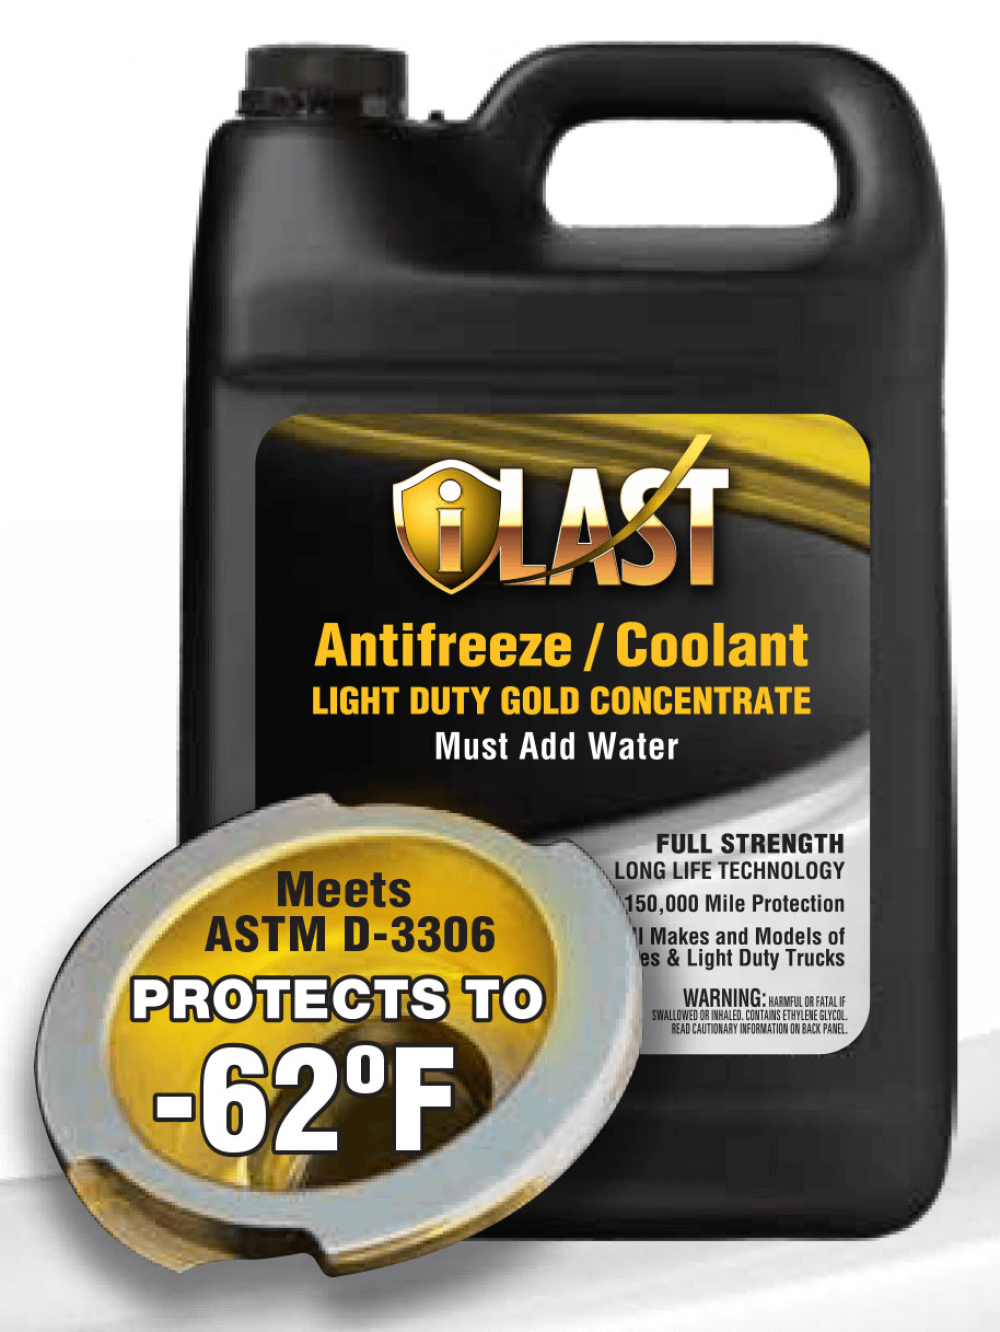 ilast Premium Light Duty Gold Concentrate Antifreeze